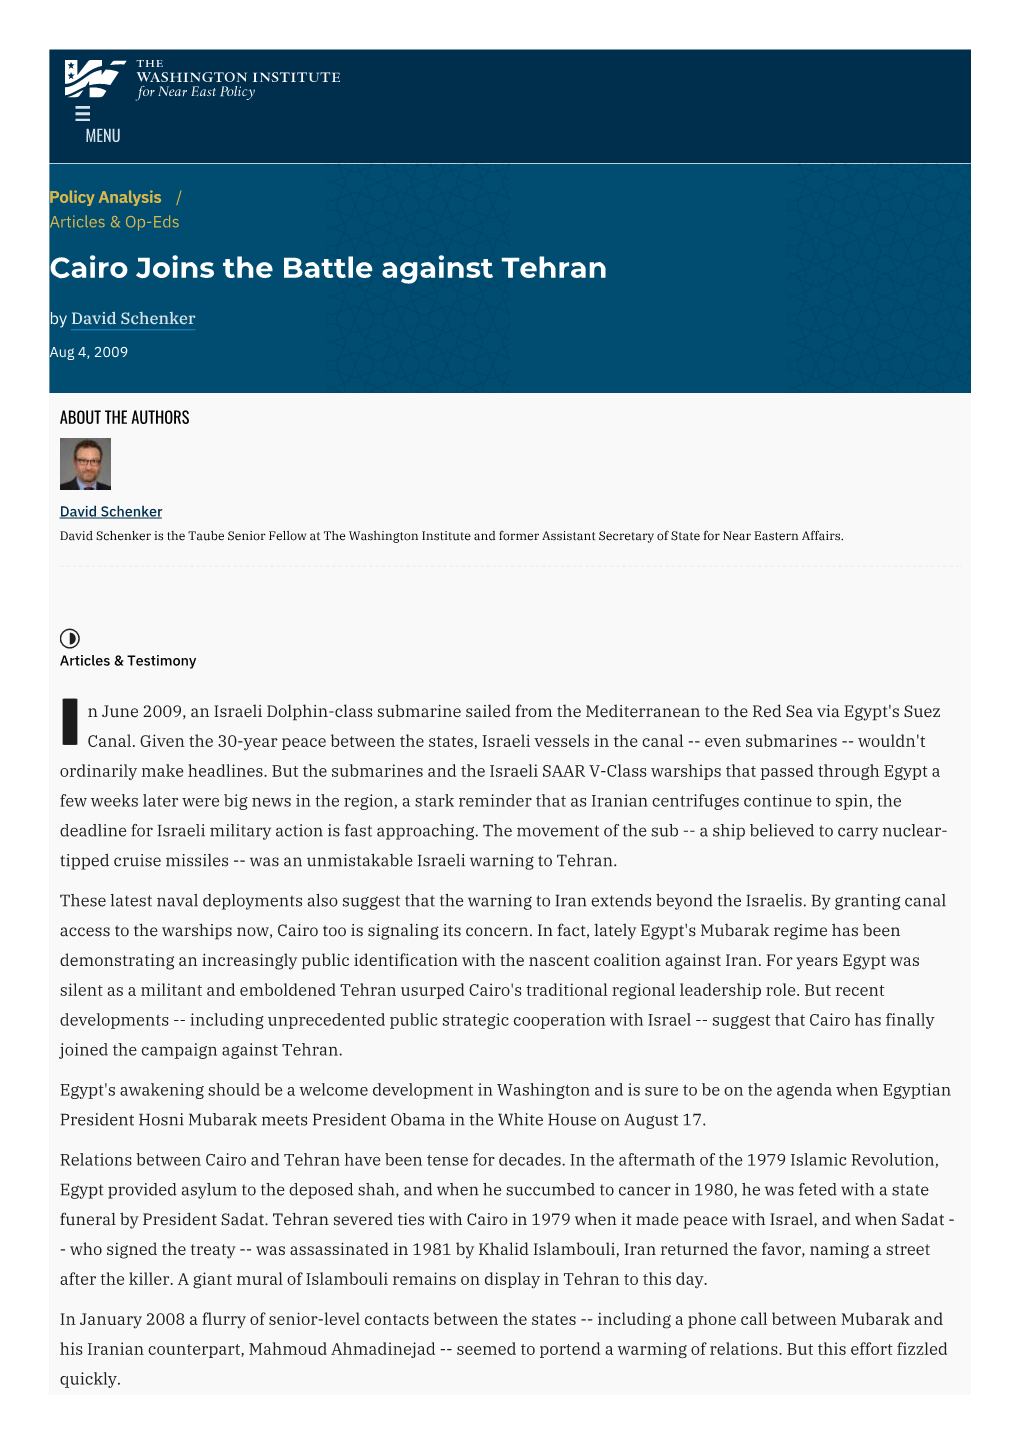 Cairo Joins the Battle Against Tehran | the Washington Institute